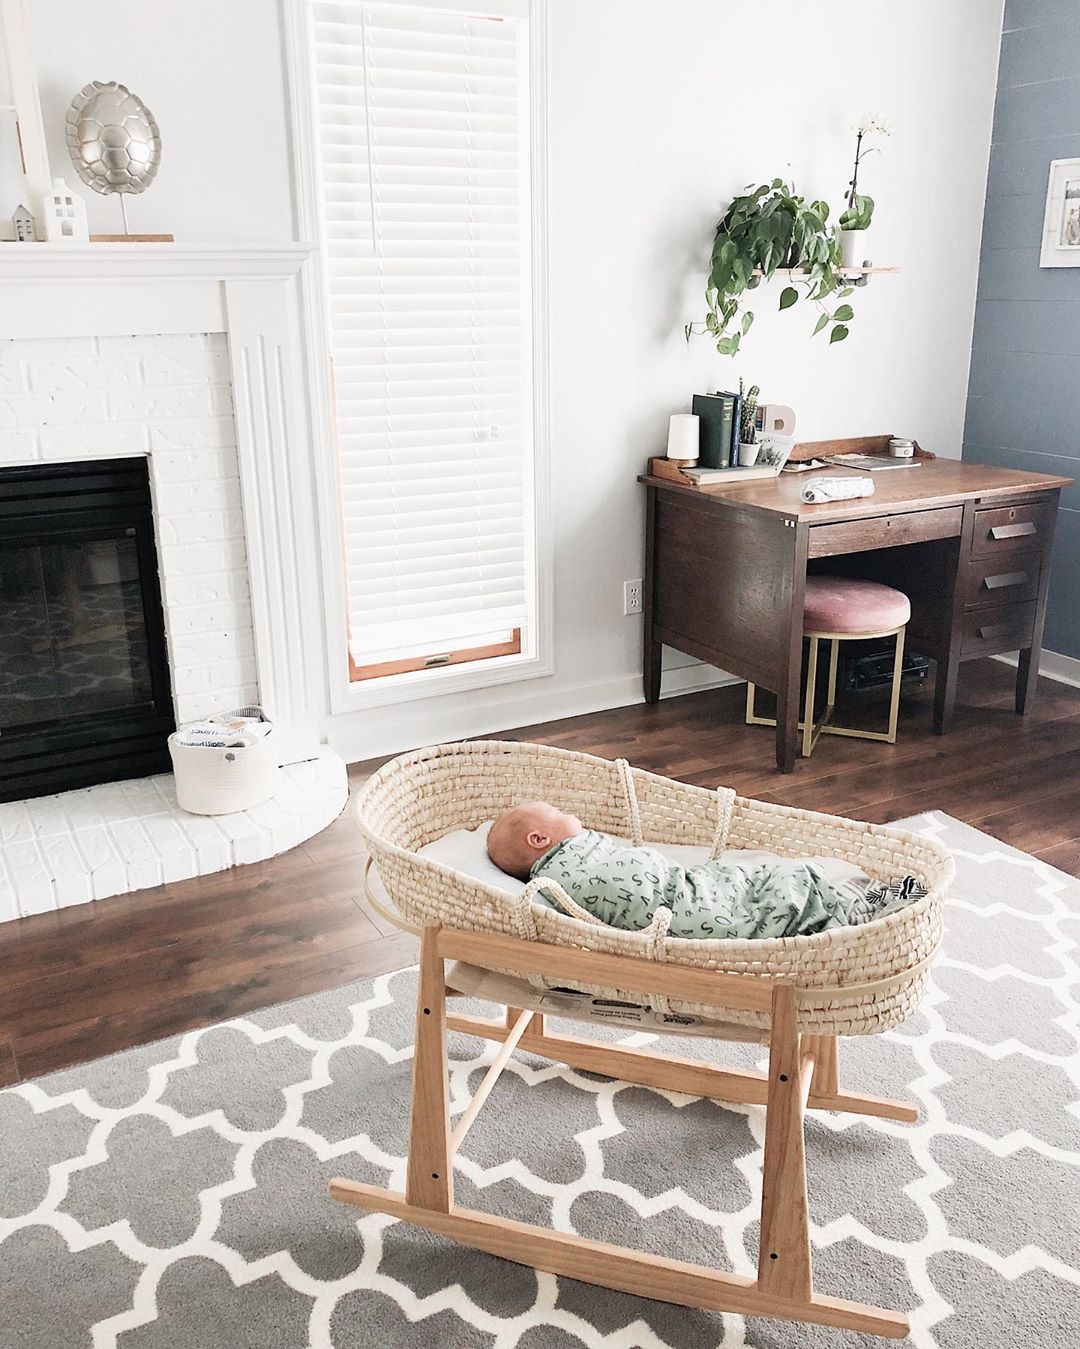 Baby sleeping in bassinet in living room. Photo by Instagram user @hellosparrows